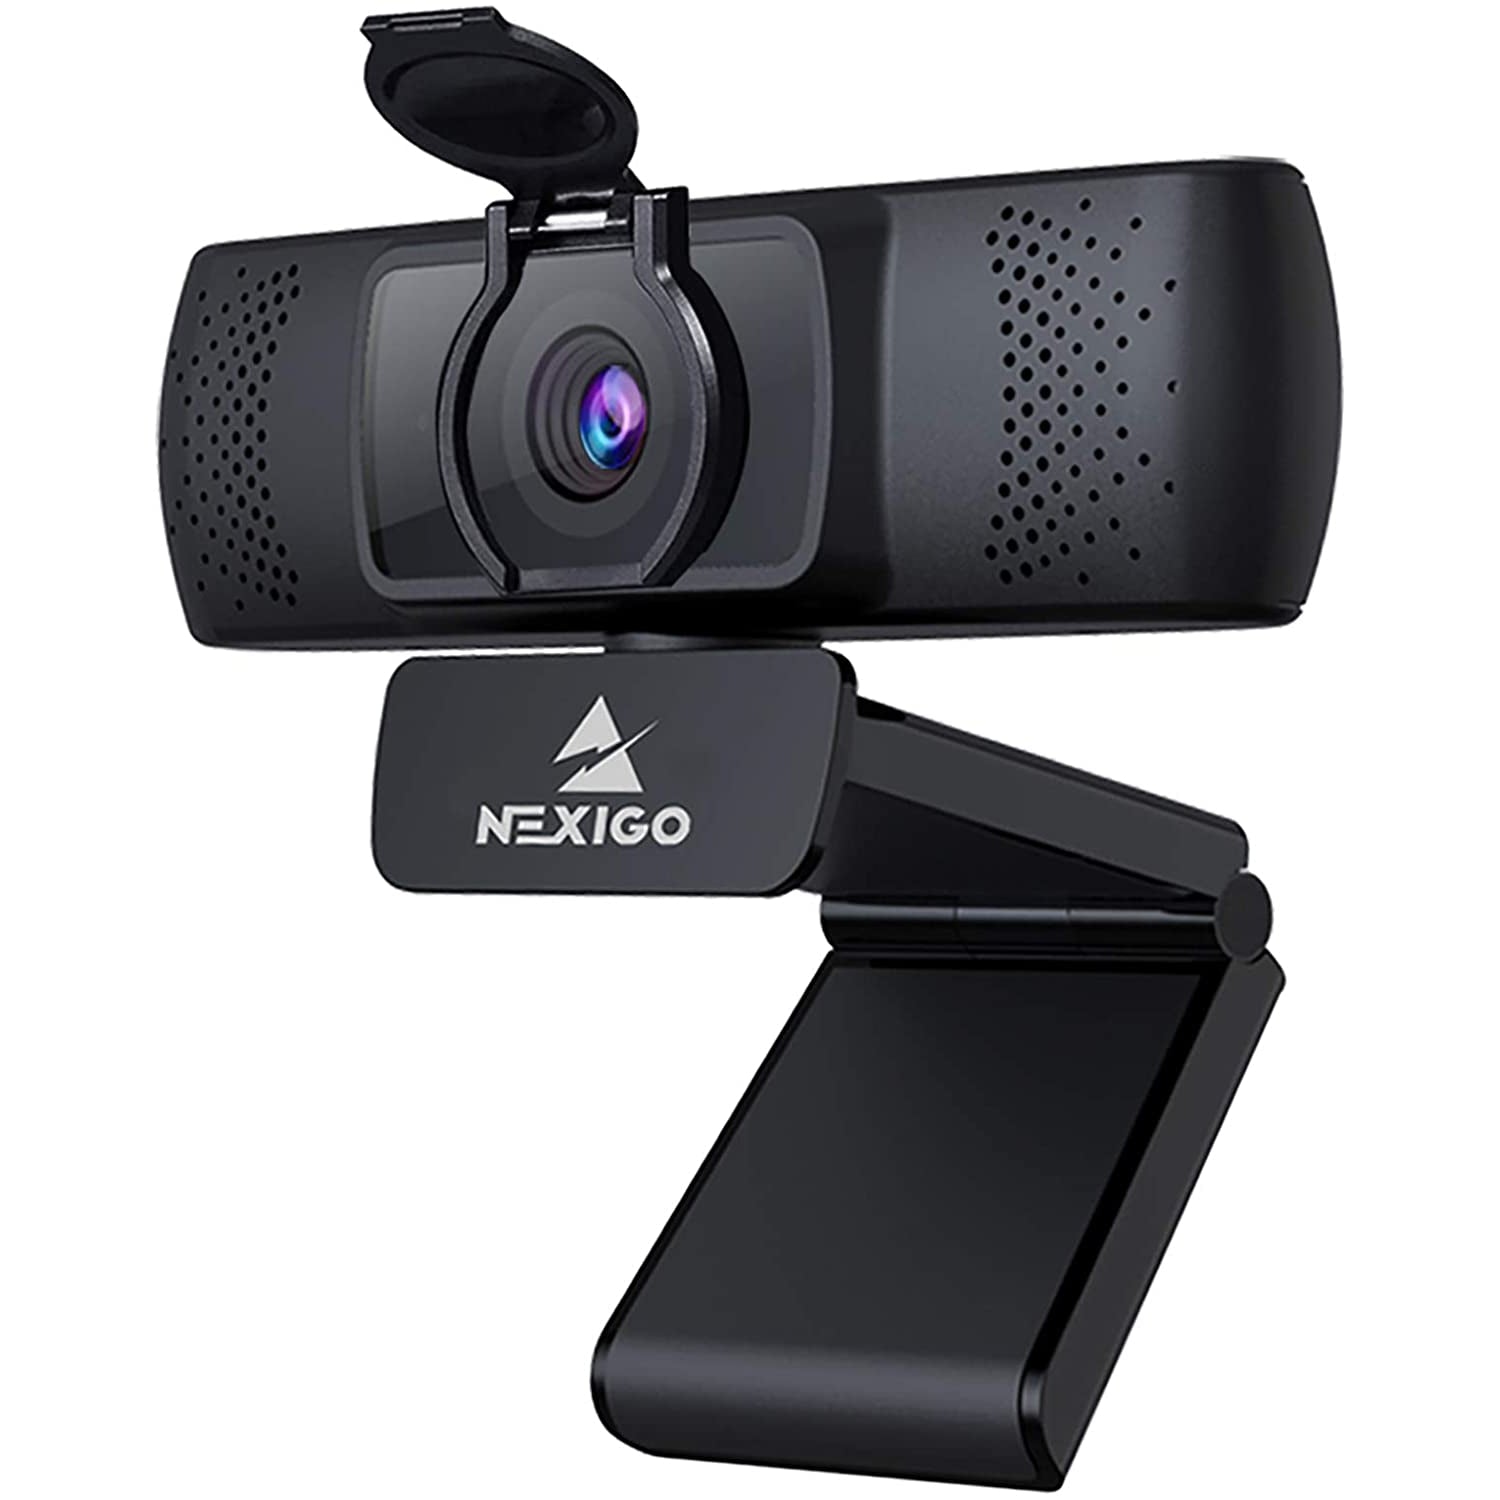 A black camera with a privacy cover and camera clip